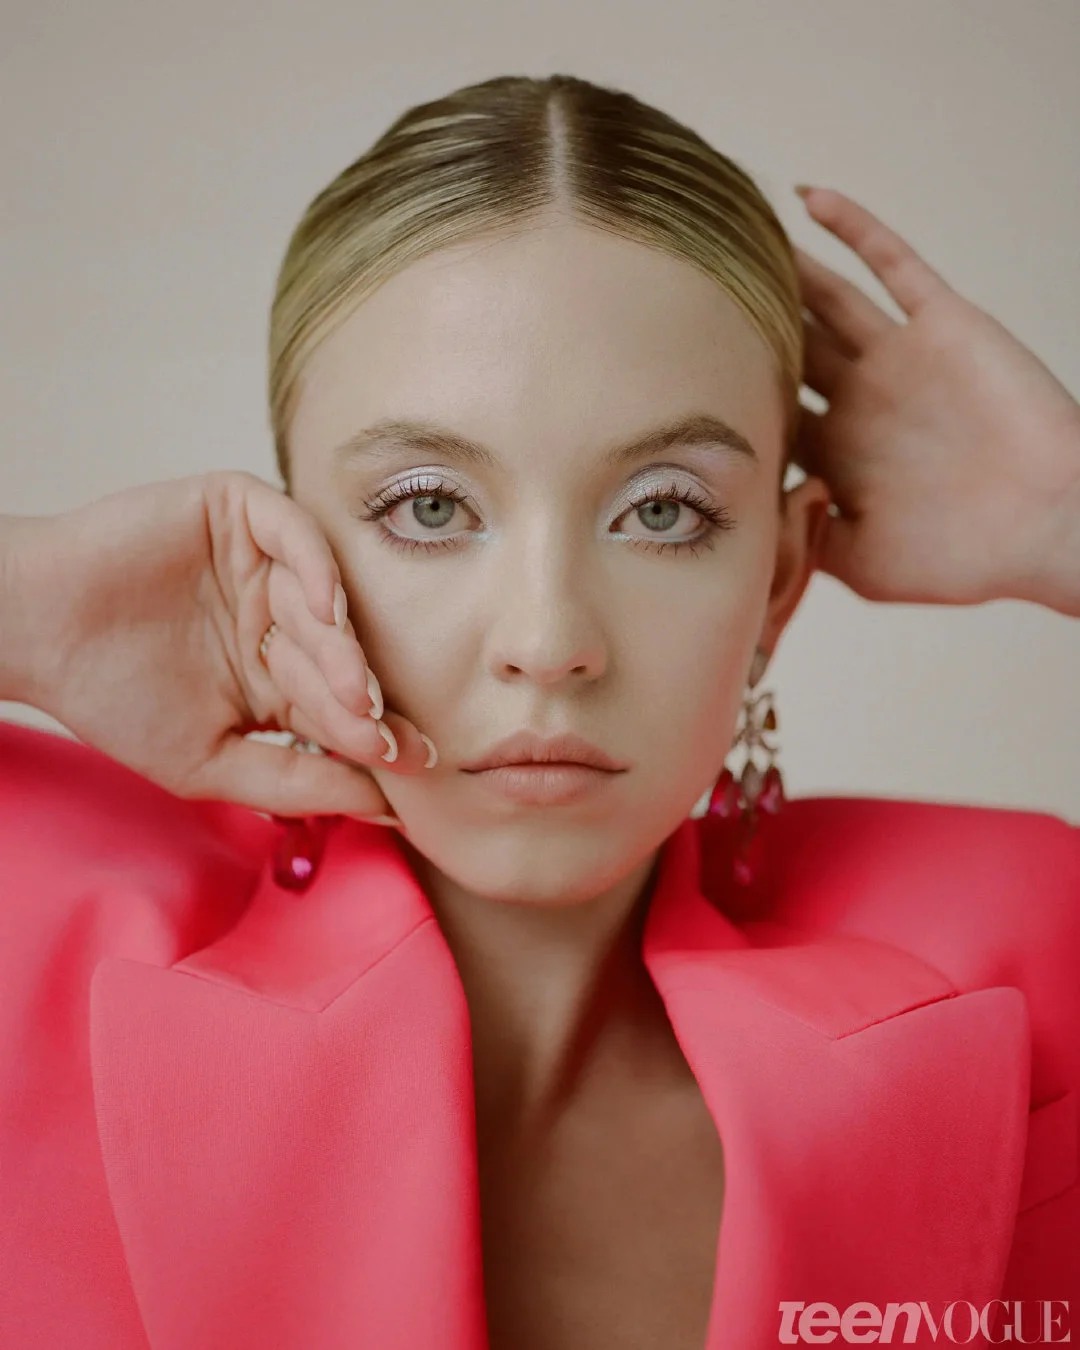 Sydney Sweeney, the new photo of "Teen Vogue" magazine ​​​